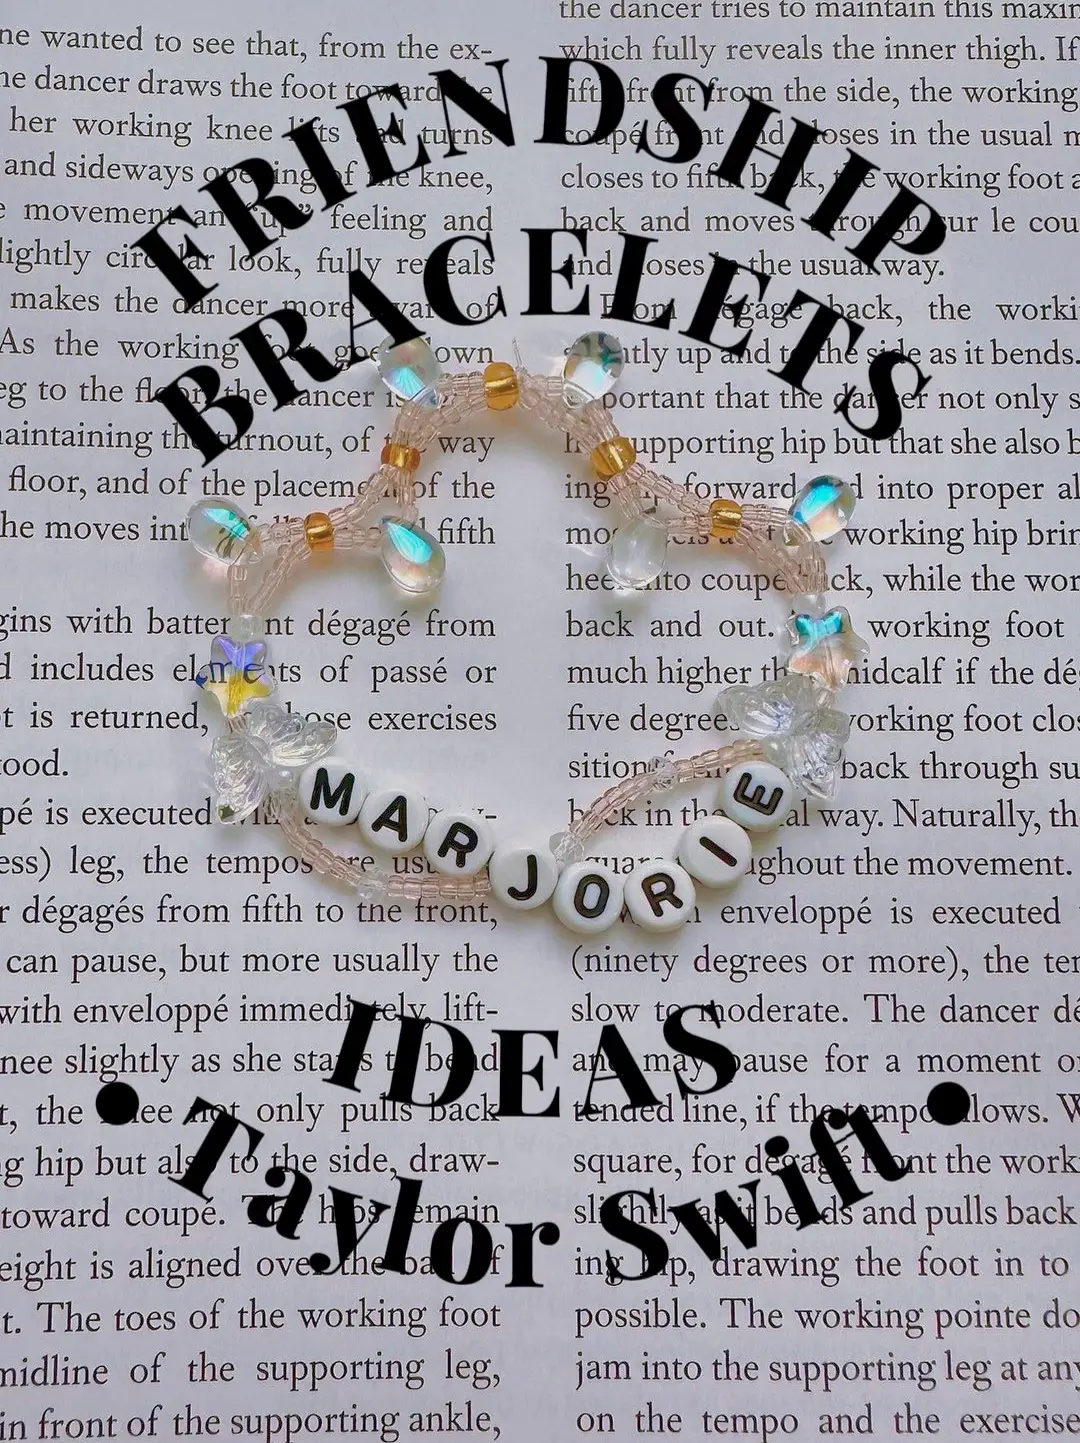 Taylor Swift friendship bracelet trend has  shop owners